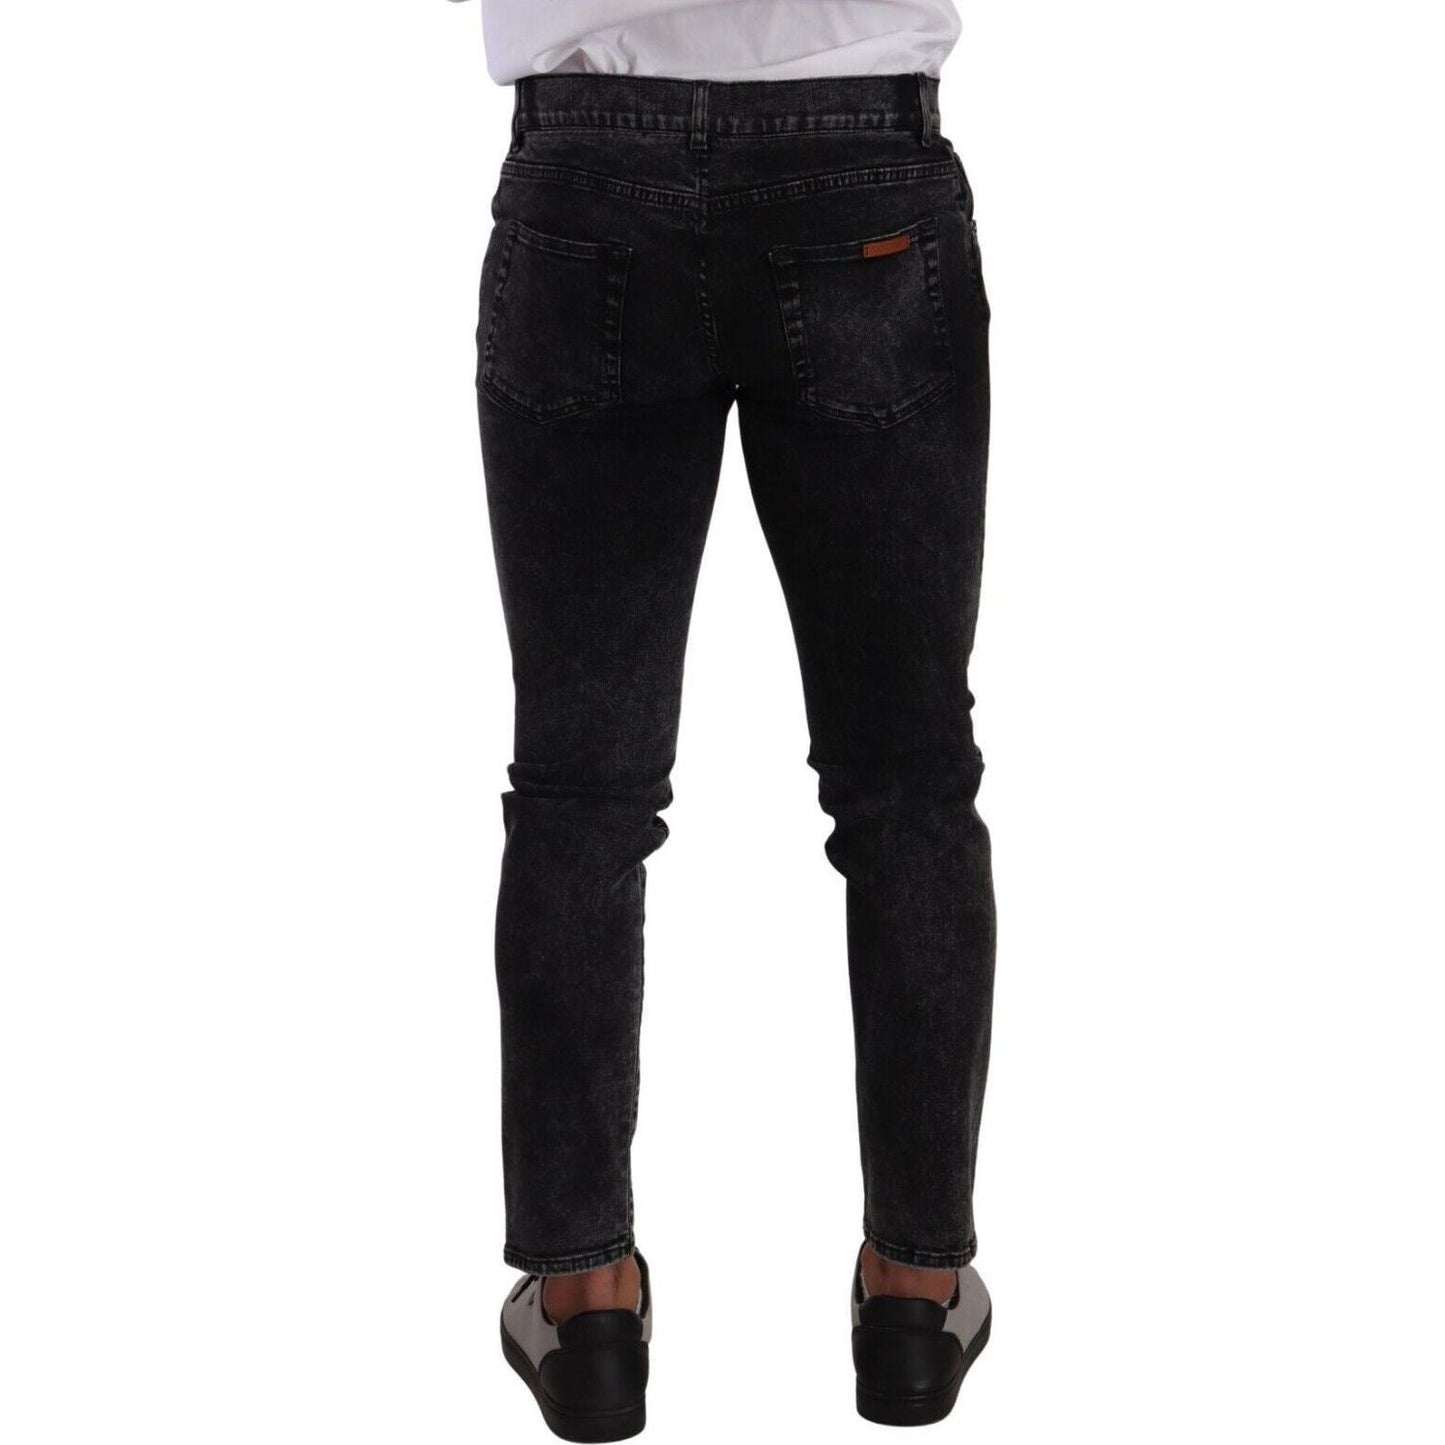 Dolce & GabbanaSleek Slim-Fit Designer Jeans in Black GrayMcRichard Designer Brands£379.00